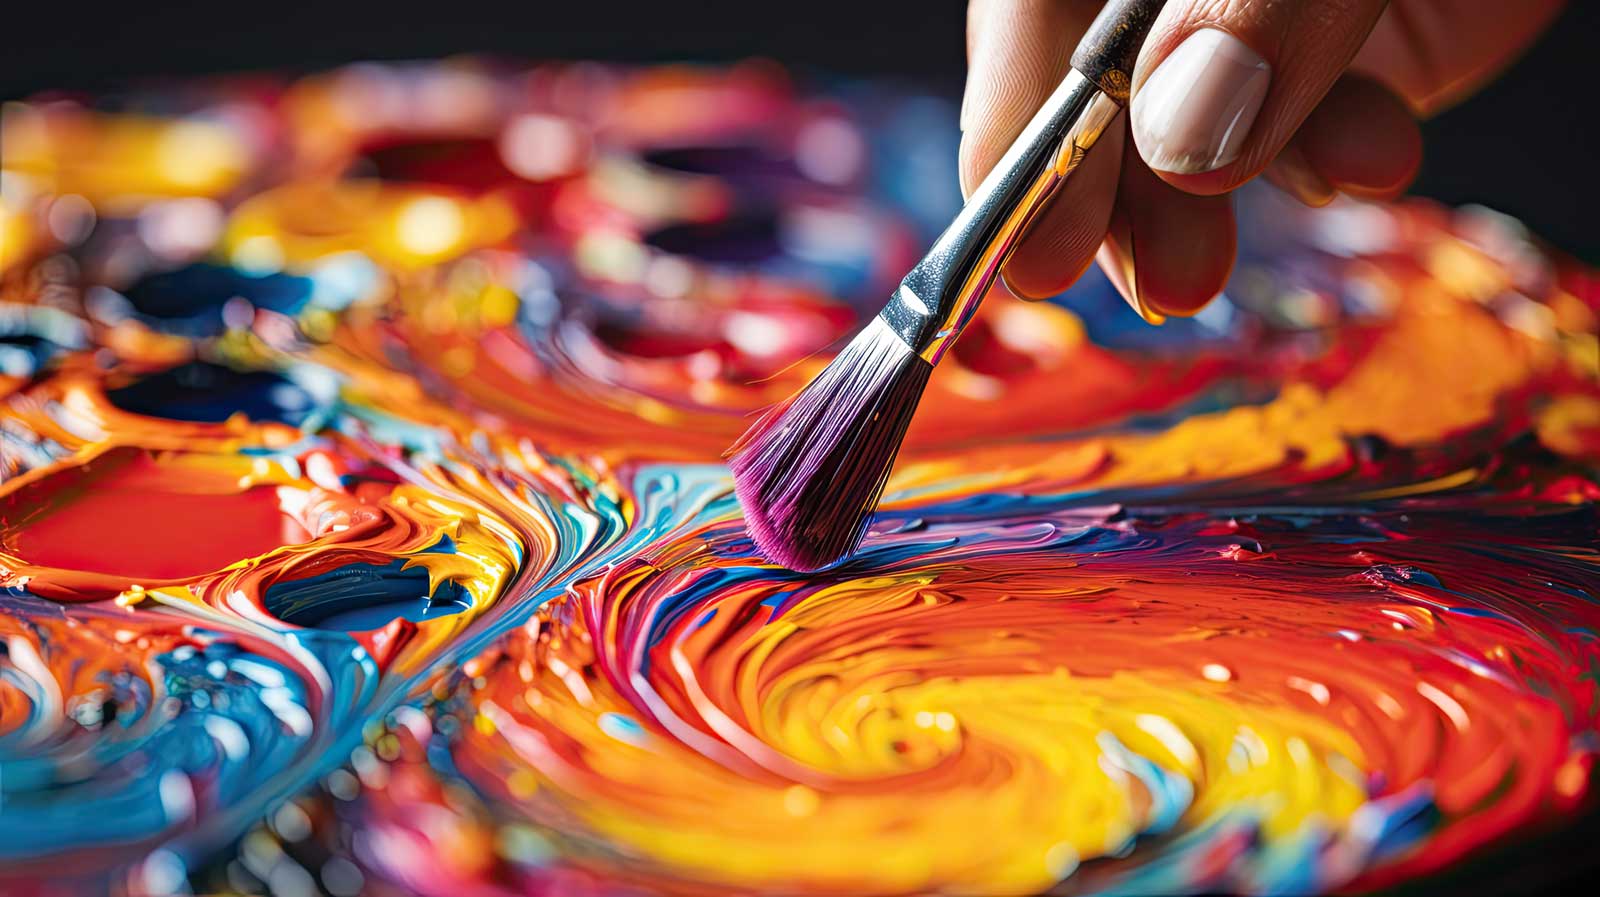 Paintbrush swirls of bright colors